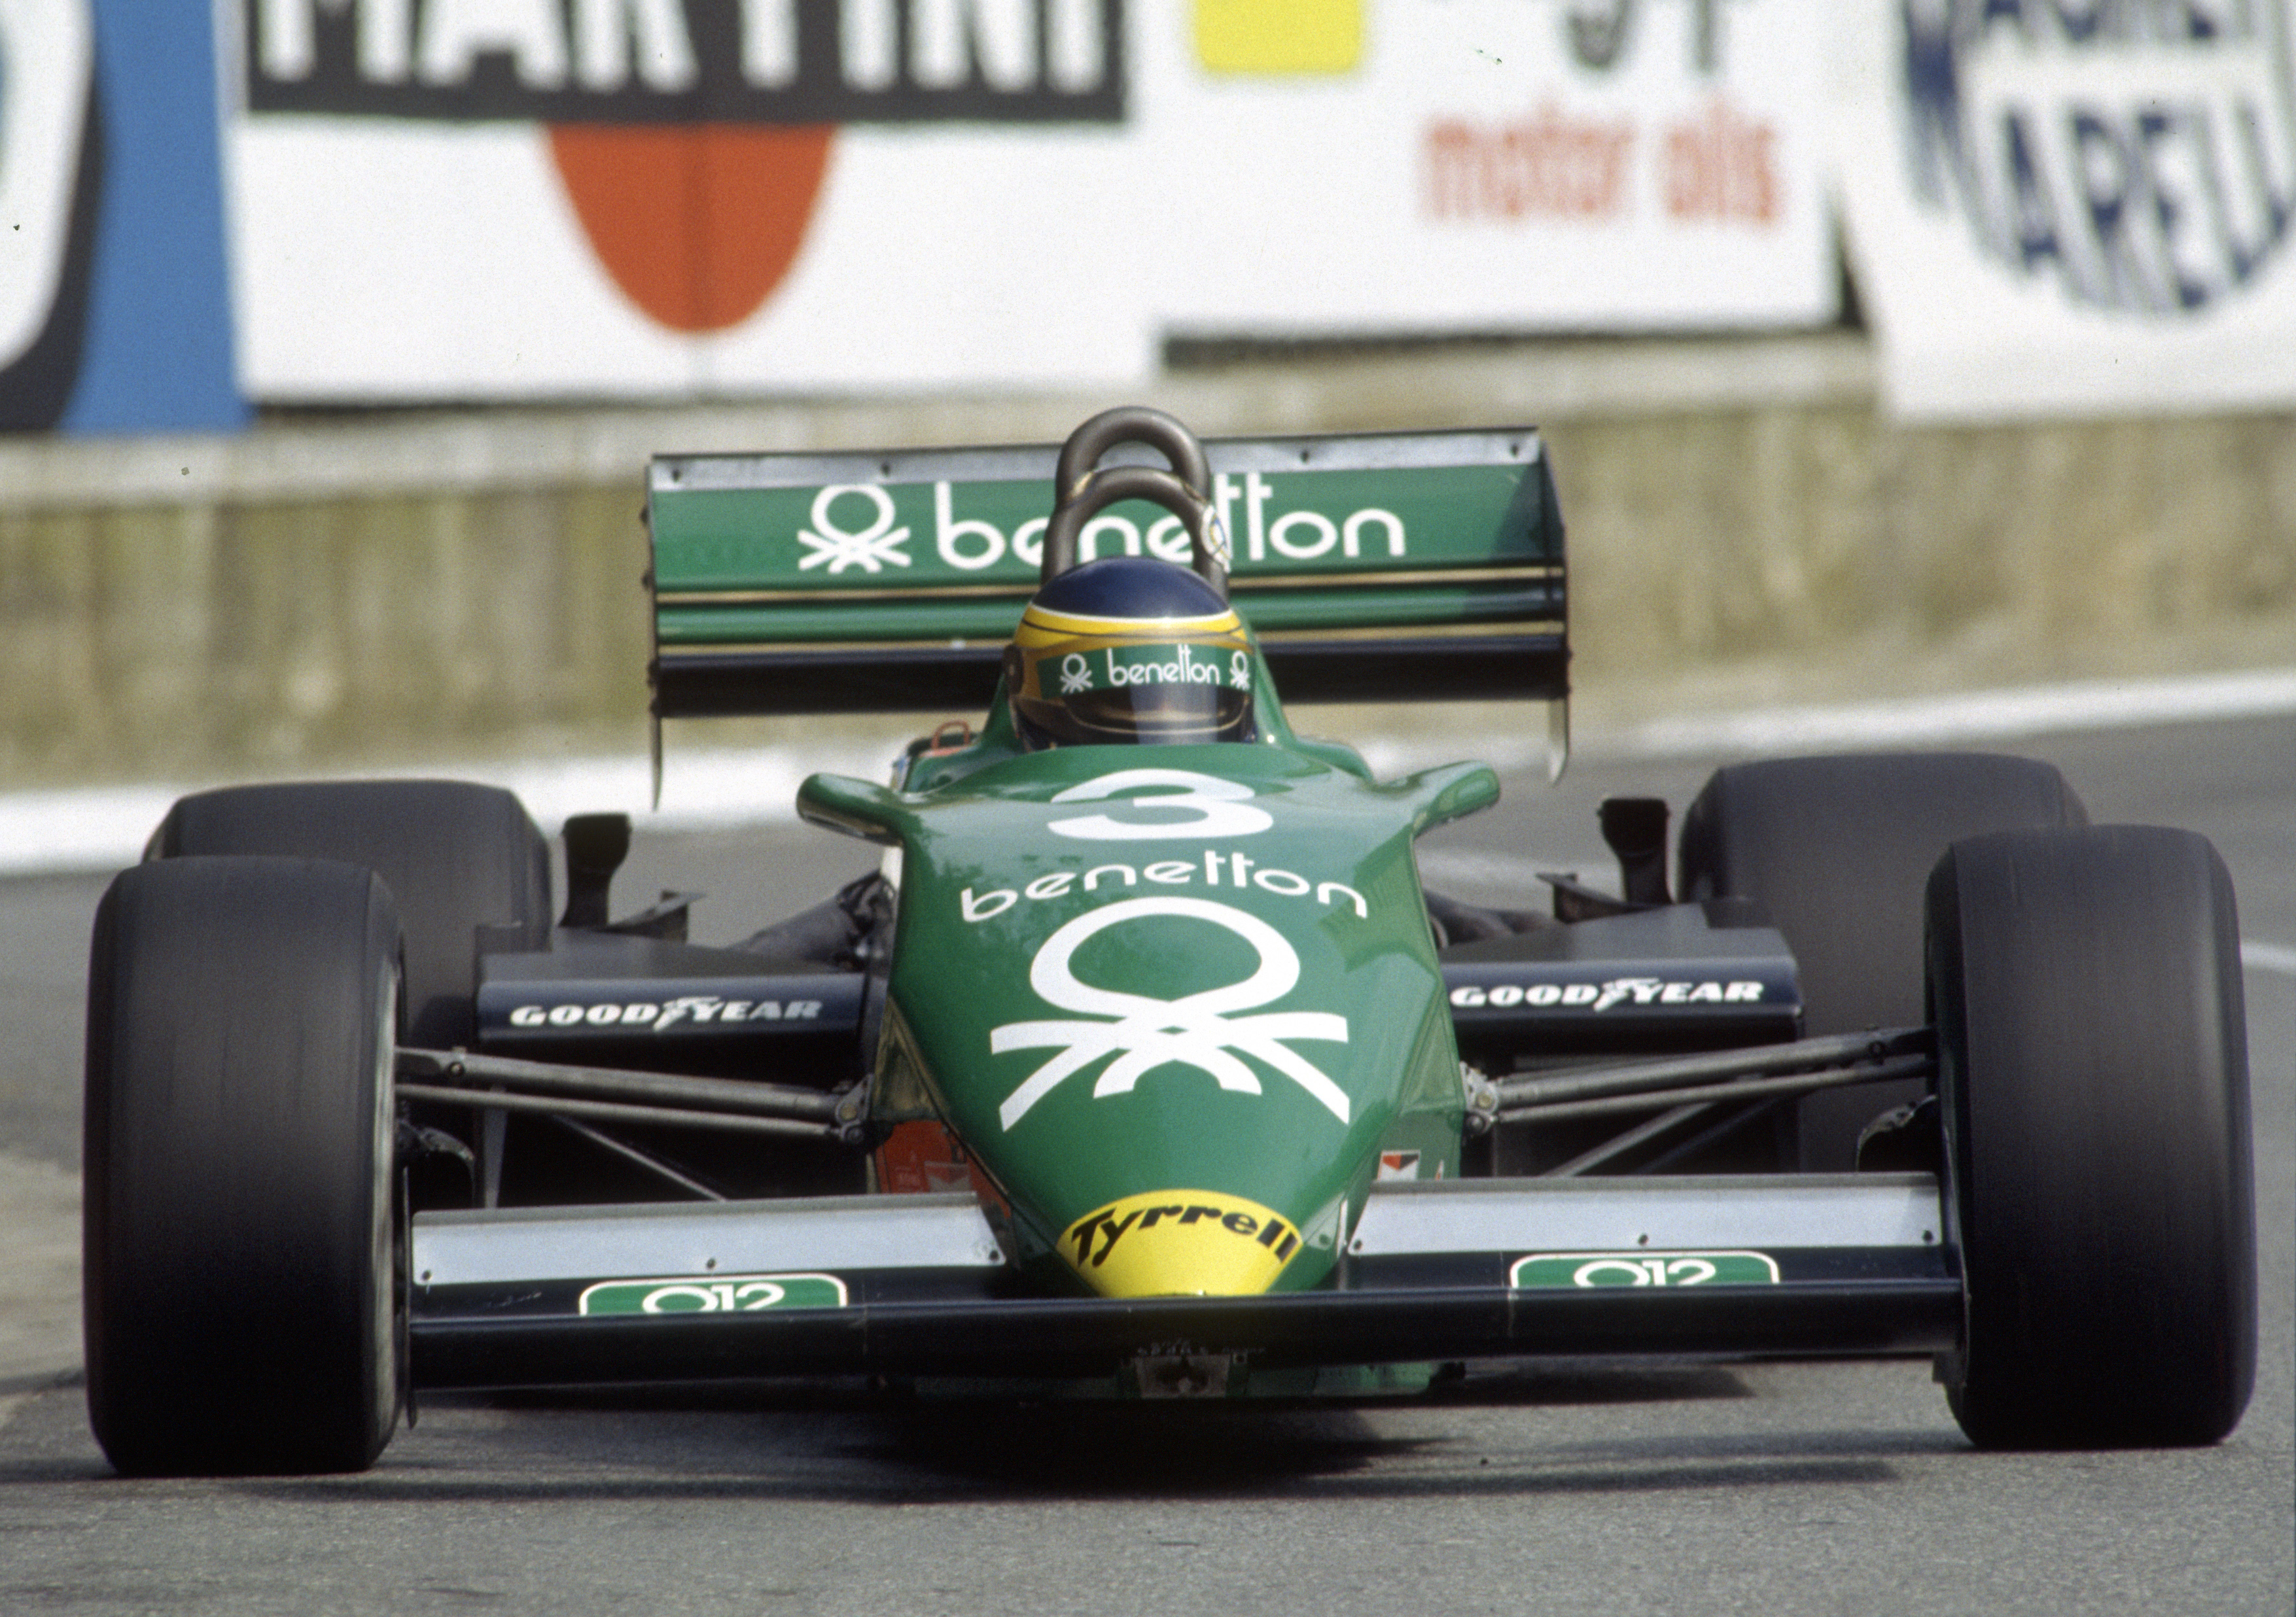 The story of Brabham's terminal F1 decline